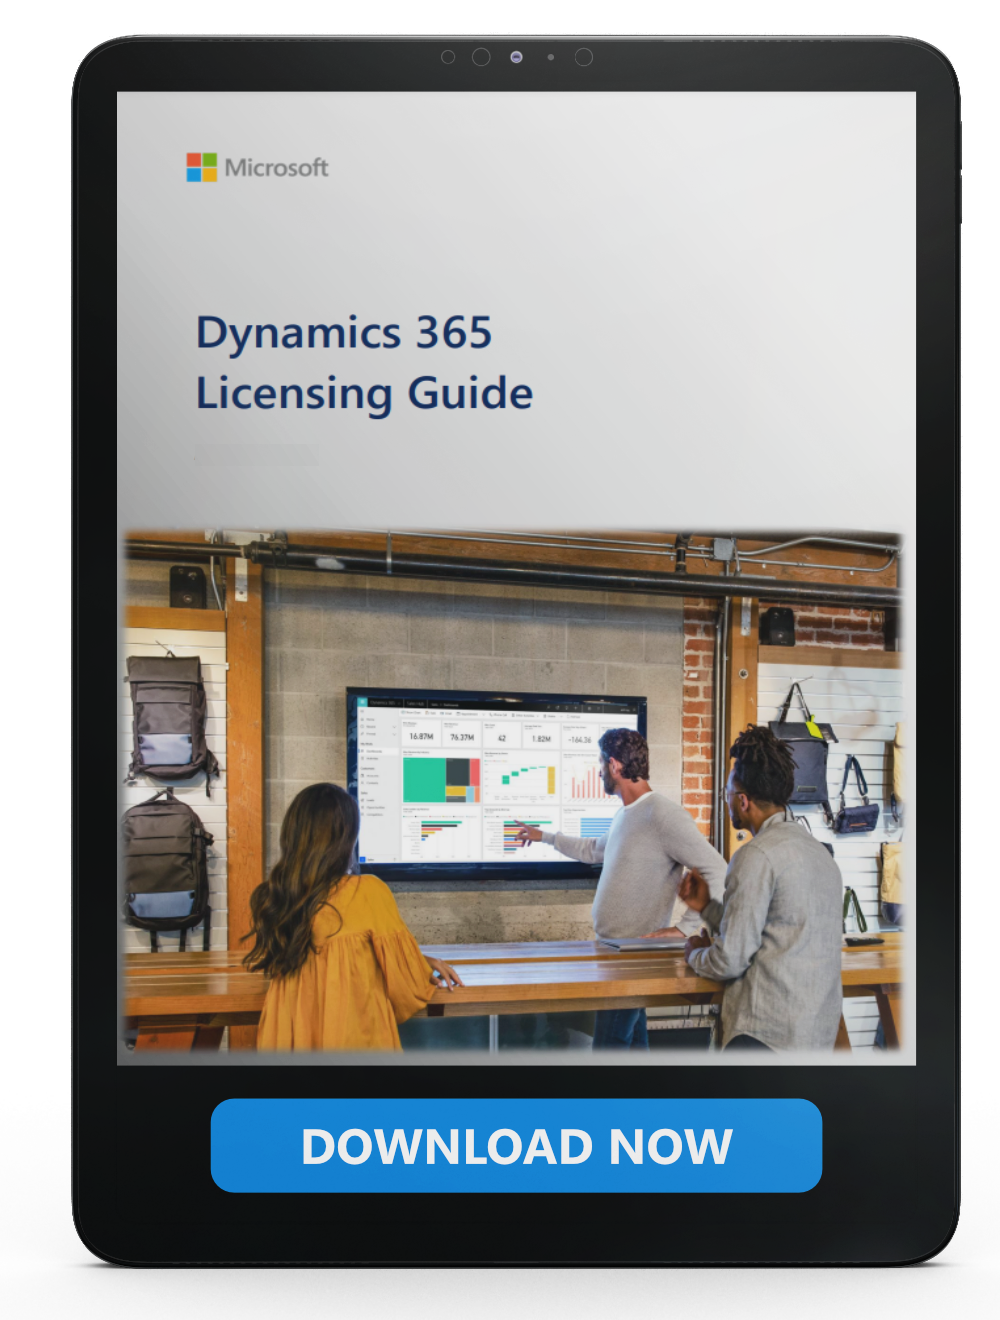 Dynamics 365 Licensing Guide